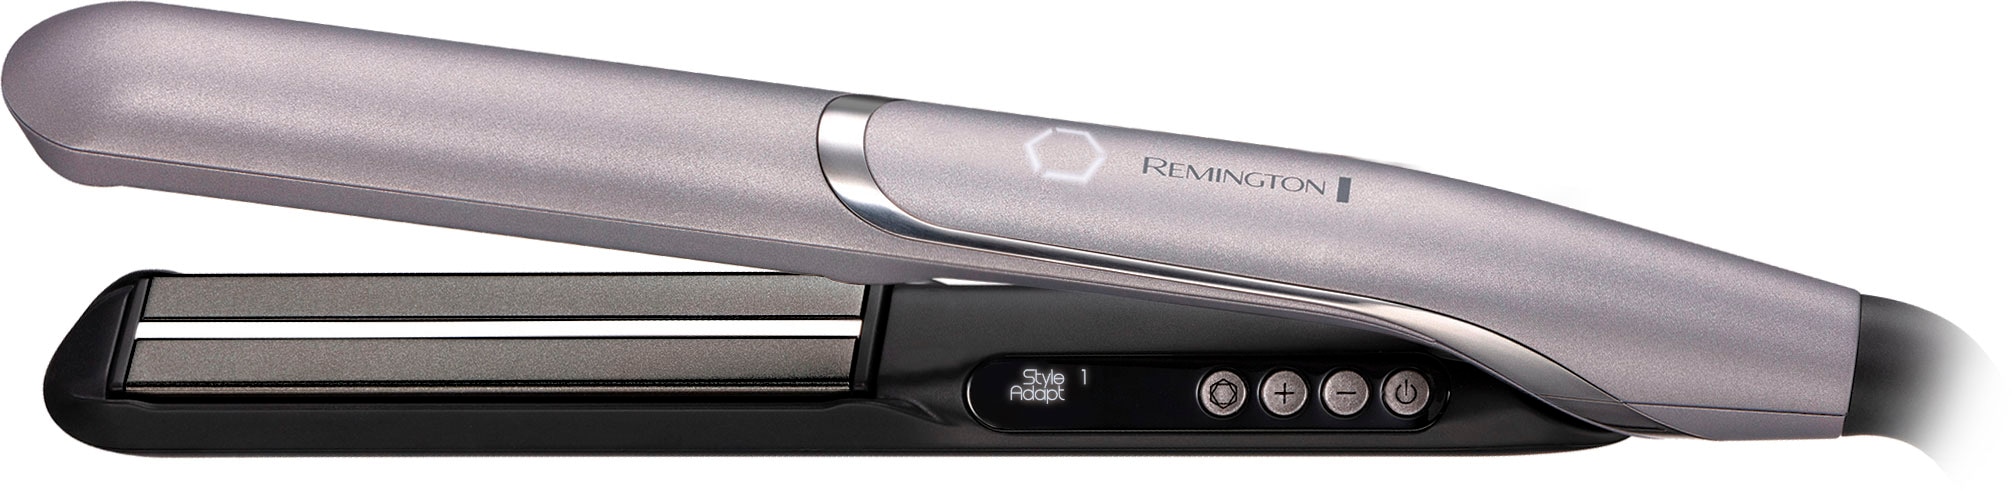 Remington Glätteisen »PROluxe 2 jetzt You™ Nutzerprofile Memory lernfähiger StyleAdapt™ bei S9880«, kaufen Keramik-Beschichtung, Funktion, Haarglätter, OTTO